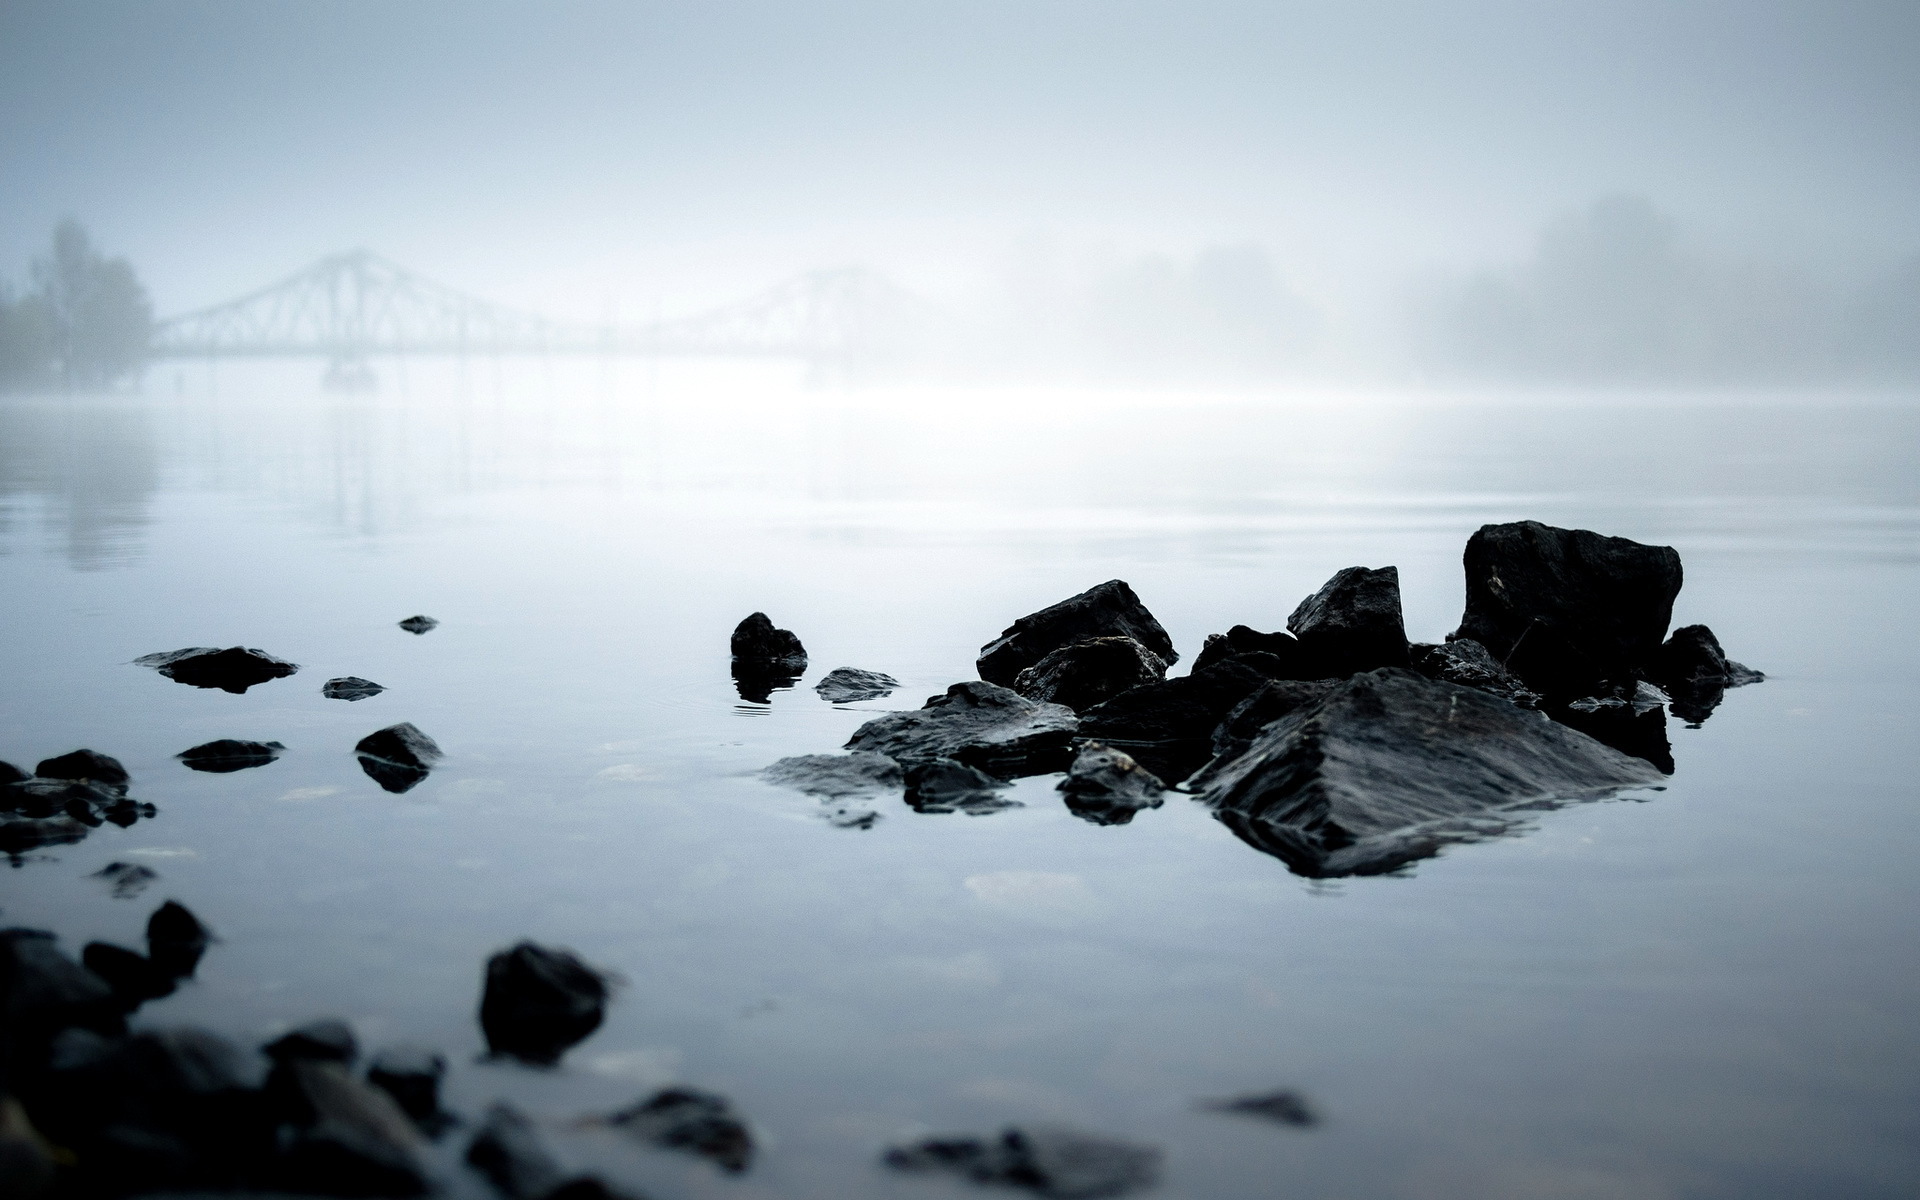 morning, River, Fog, Landscape, Shore, Reflection, Mist, Bridge Wallpaper